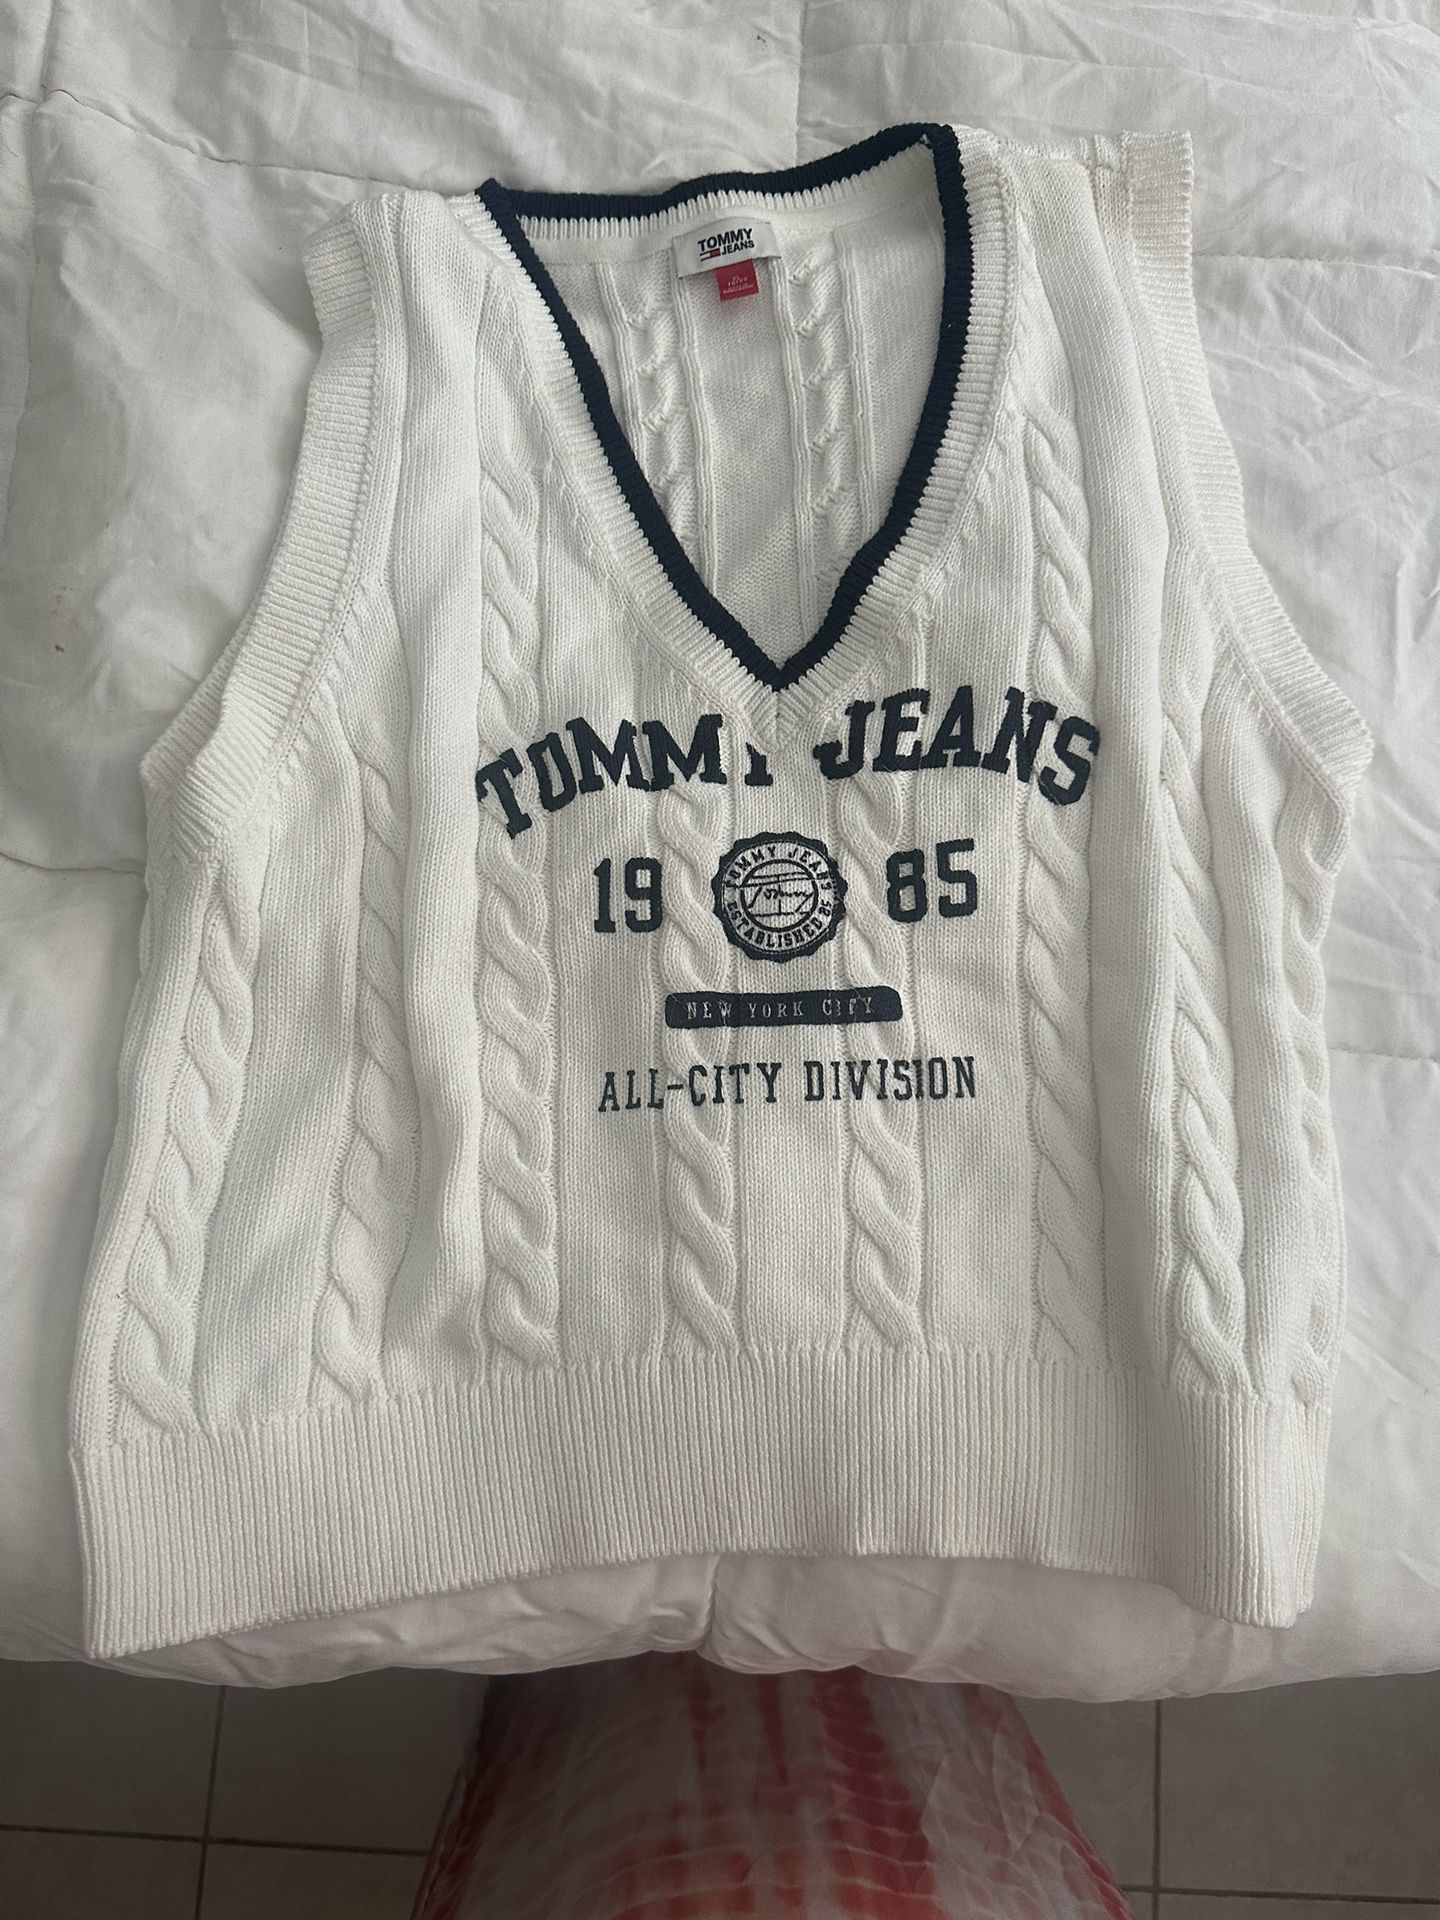 Tommy Jeans White Blue V-Neck Pullover Sweater Vest Women's XL